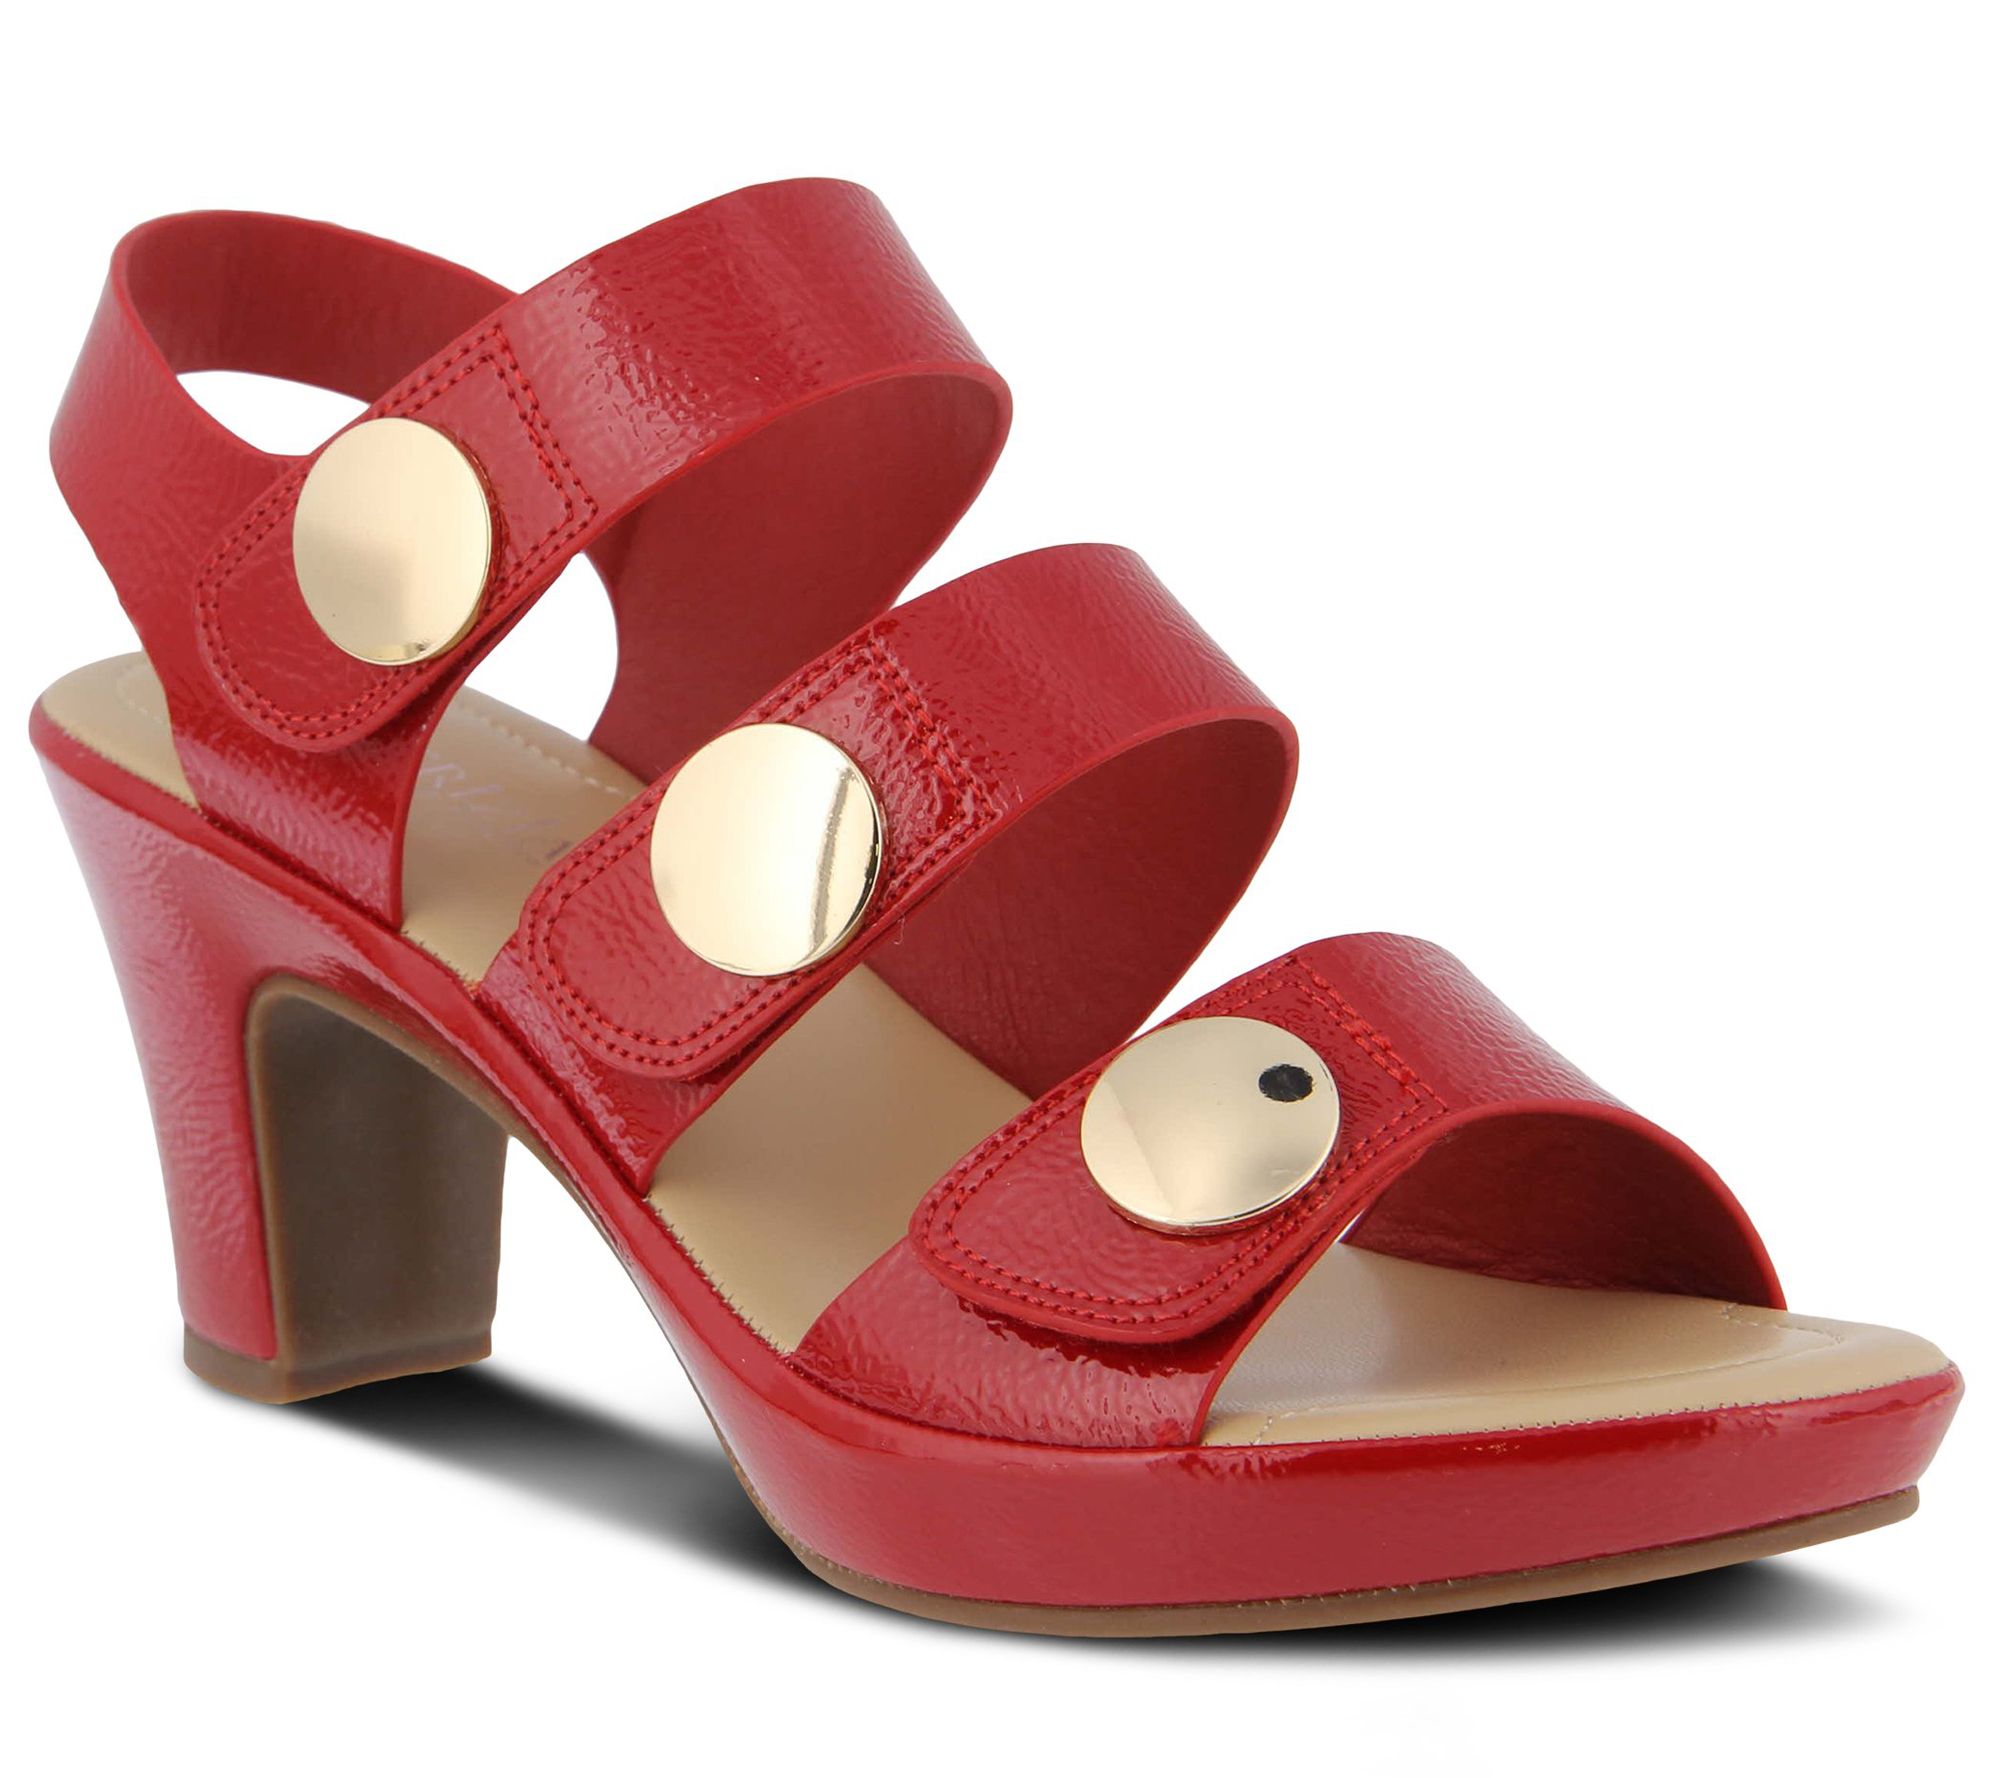 patrizia sandals by spring step